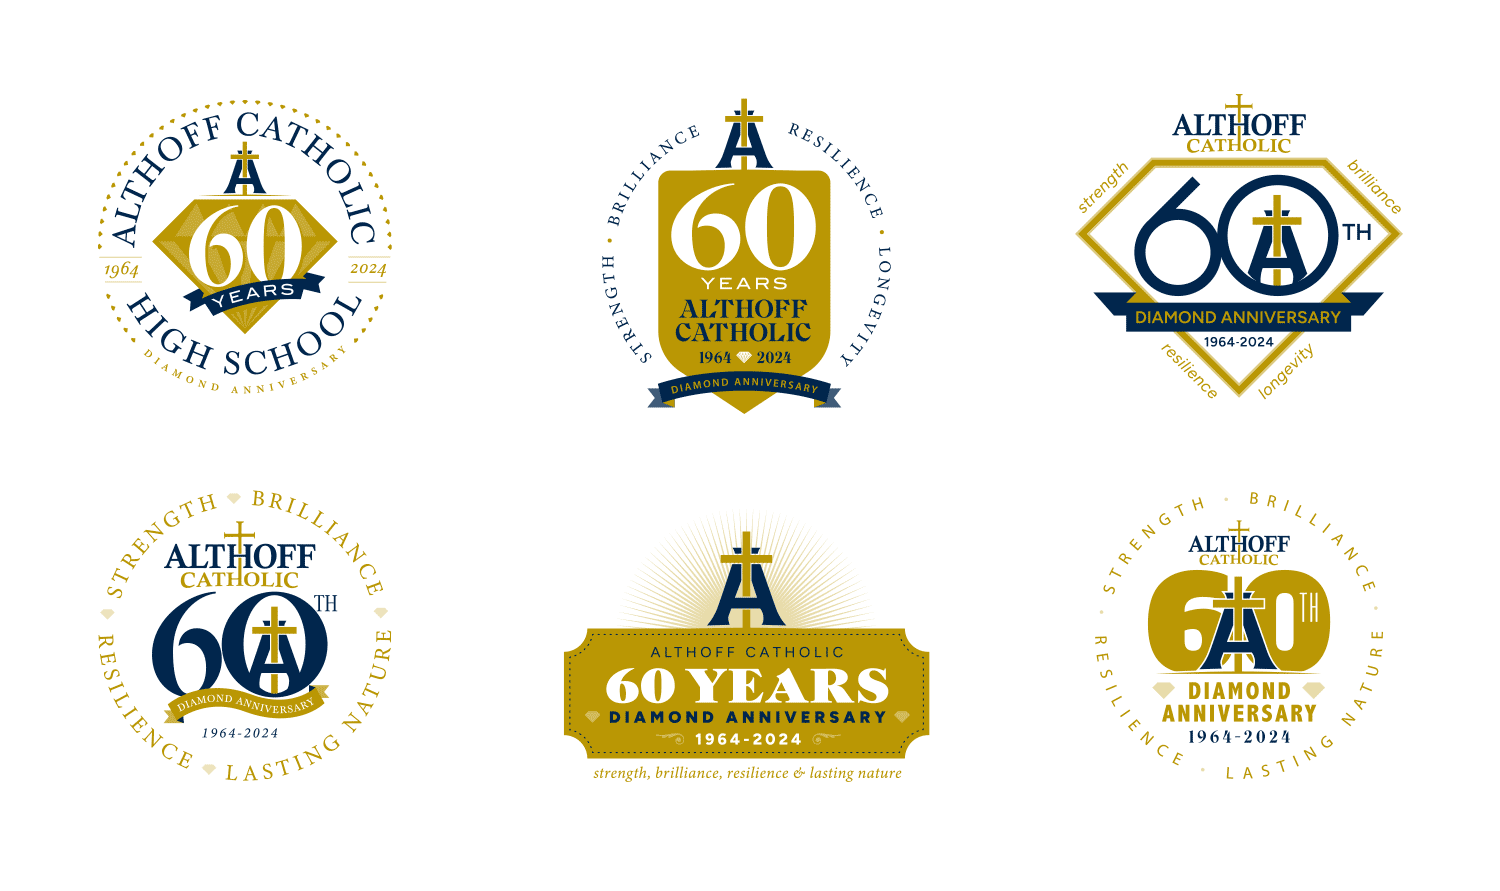 ACHS 60th anniversary logo design explorations